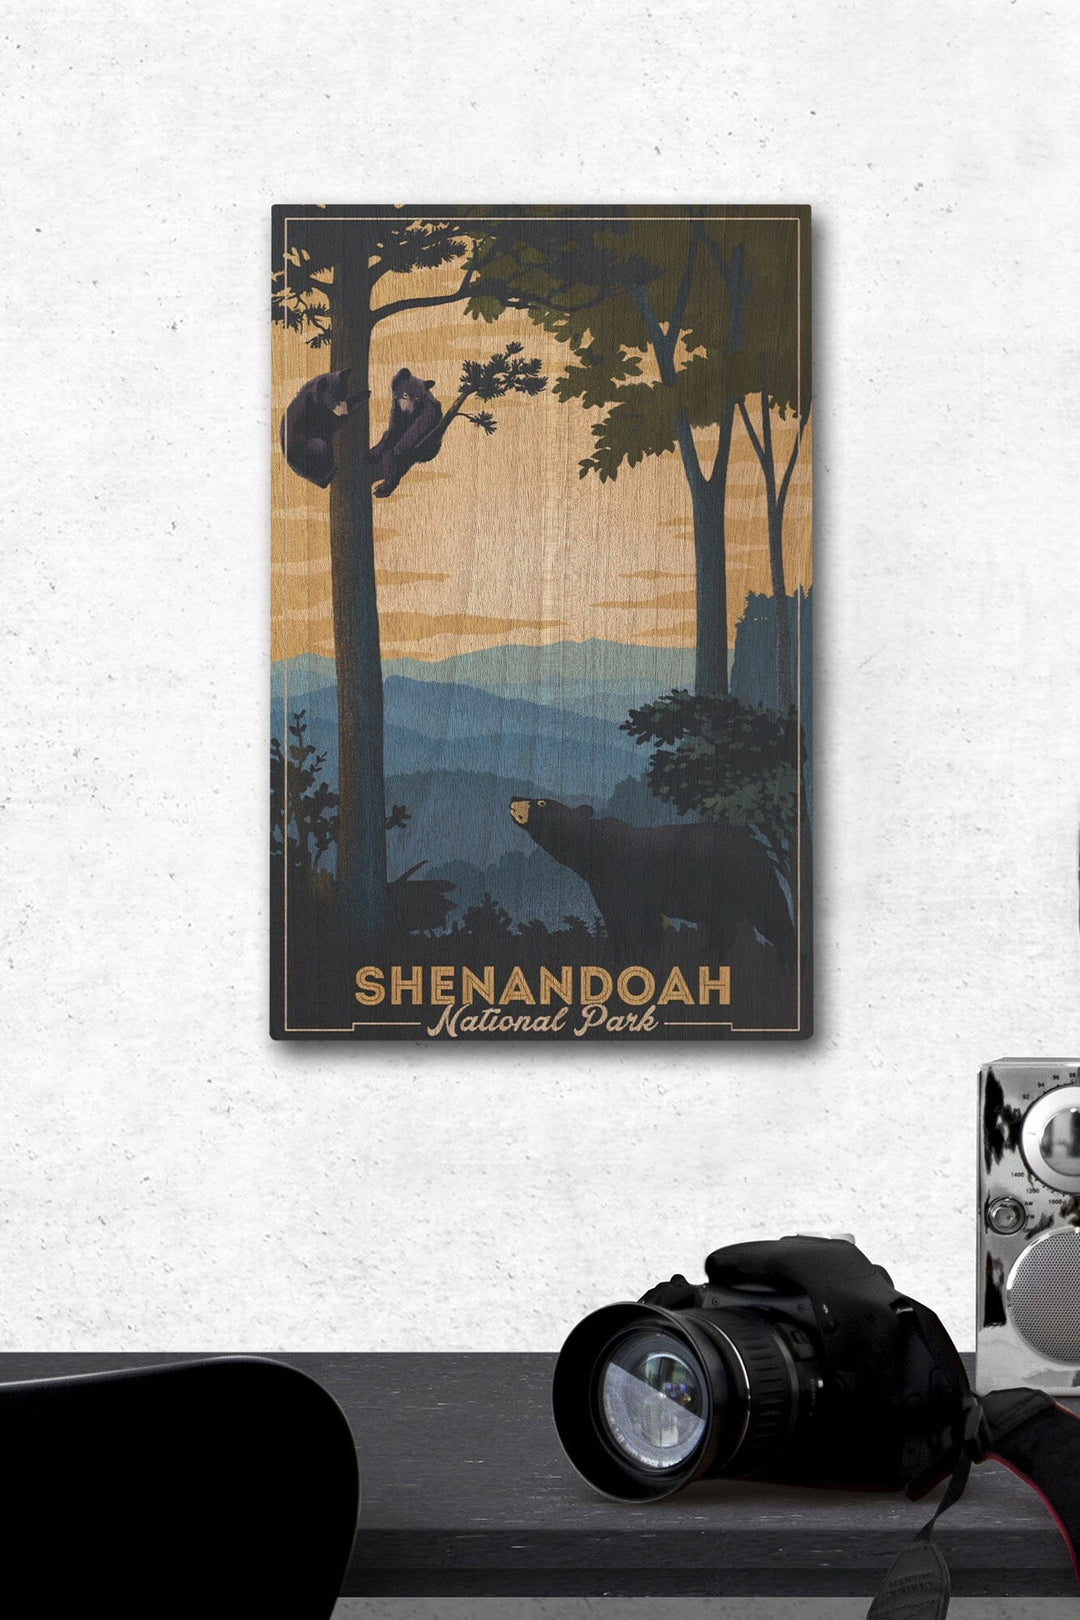 Shenandoah National Park, Black Bears, Lithograph, Lantern Press Artwork, Wood Signs and Postcards Wood Lantern Press 12 x 18 Wood Gallery Print 